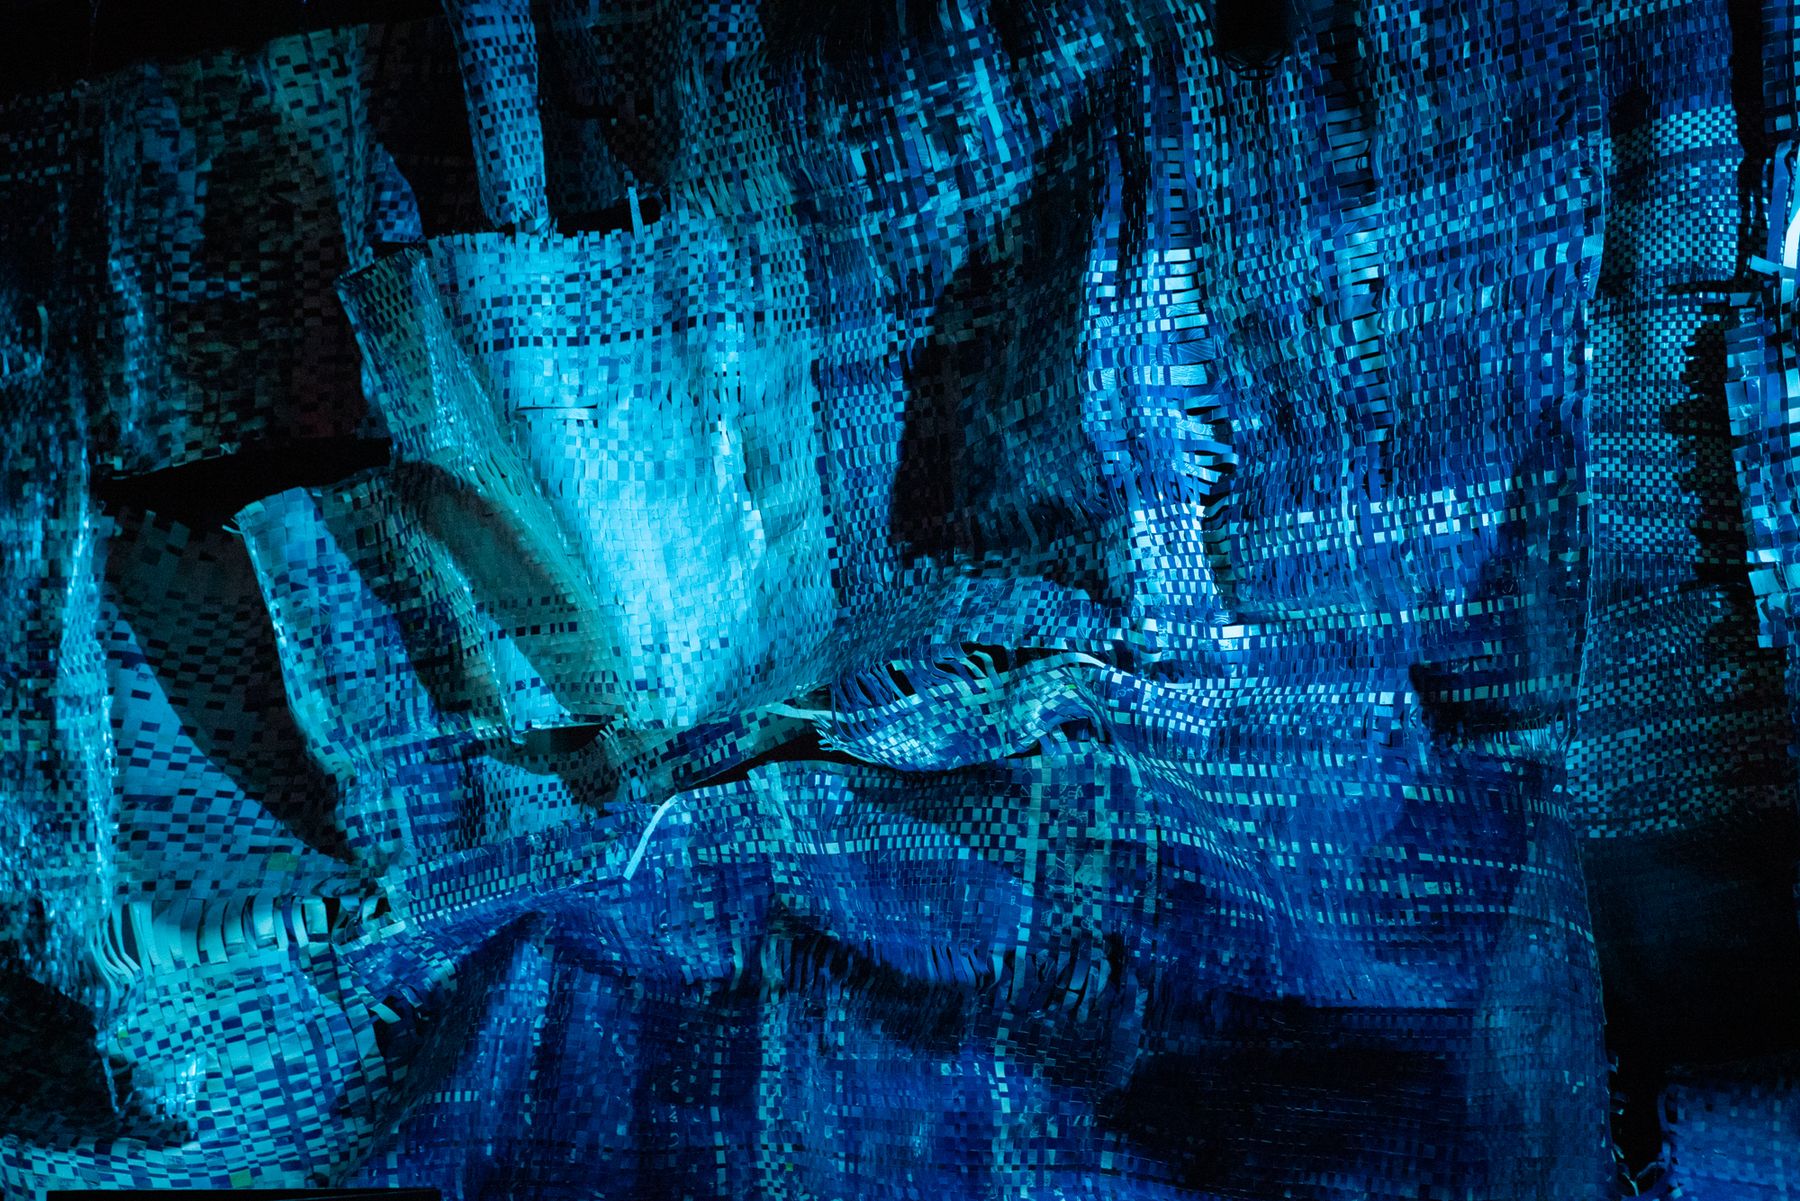 Detail of a blue weaving.